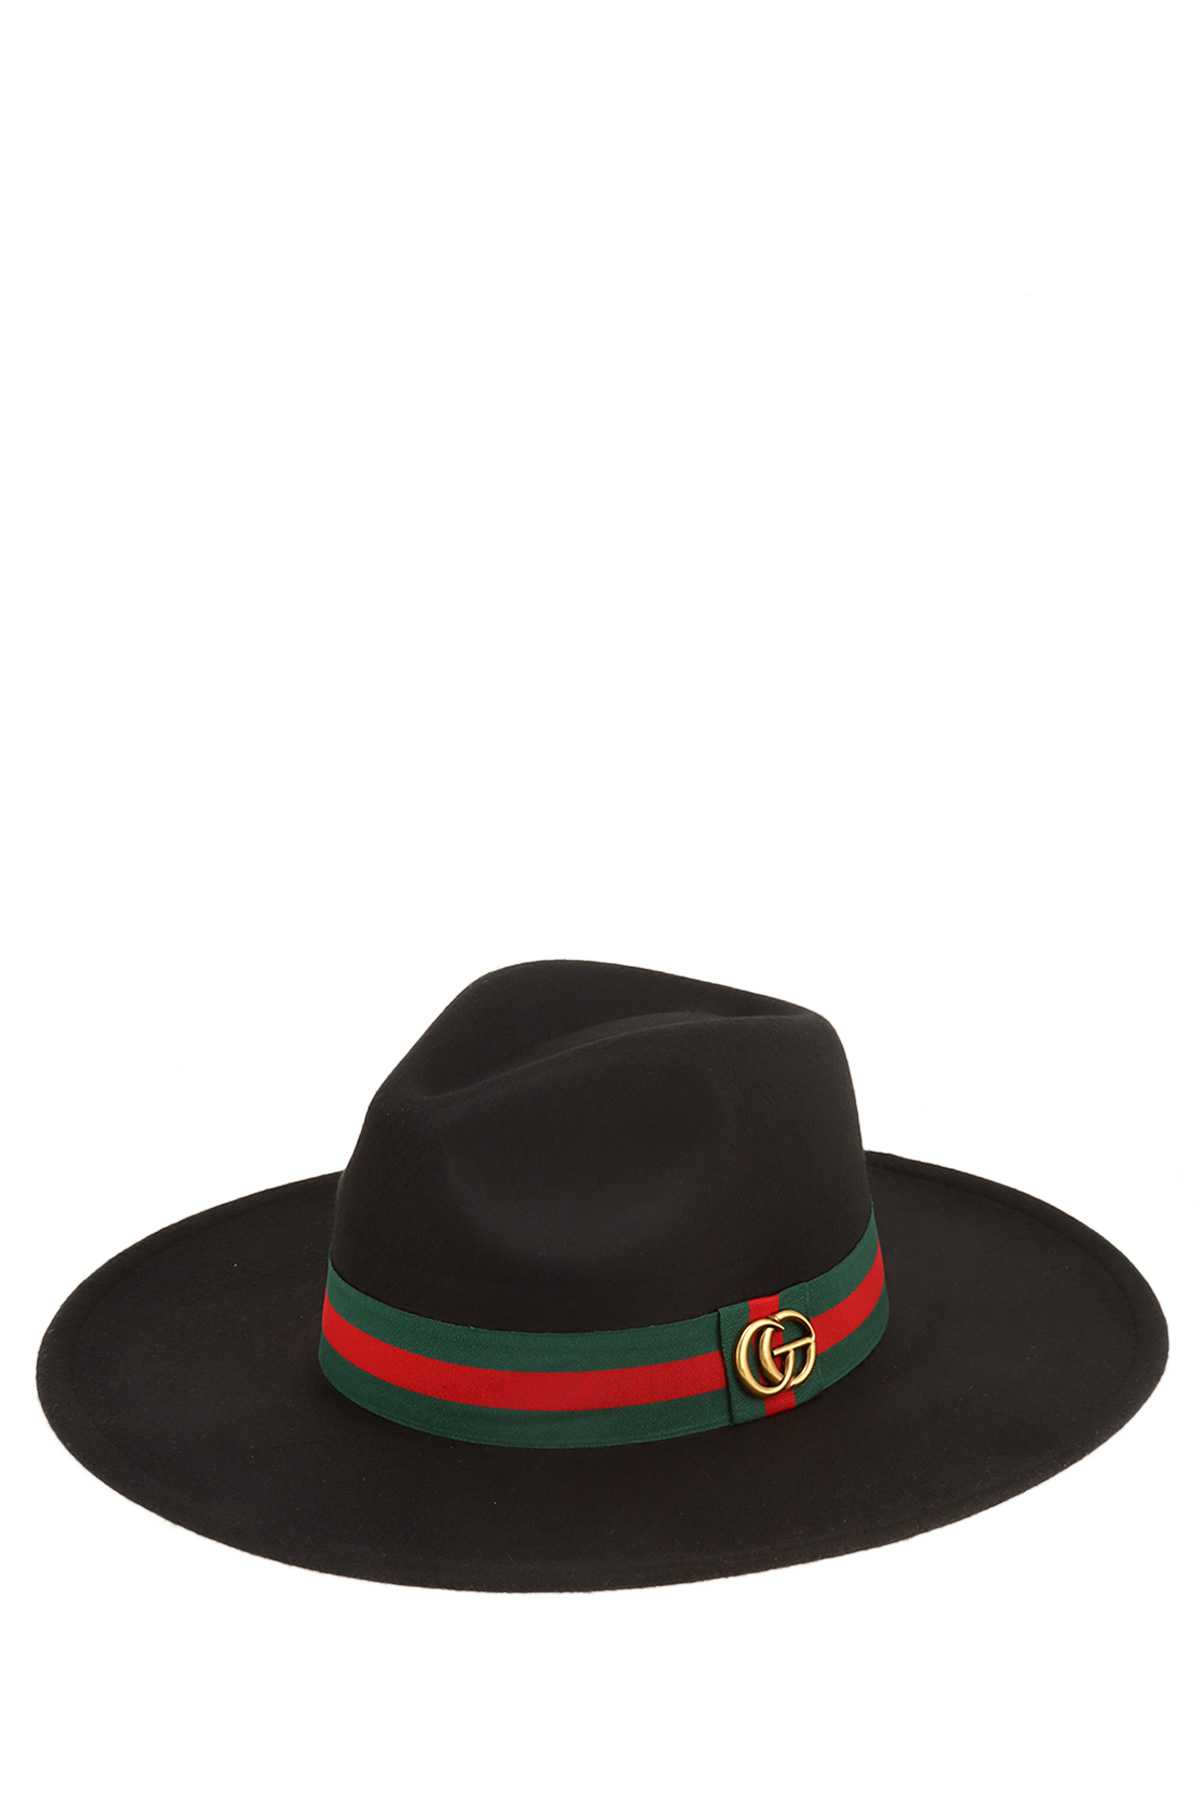 GO Charm with Stripe Band Fedora Hat